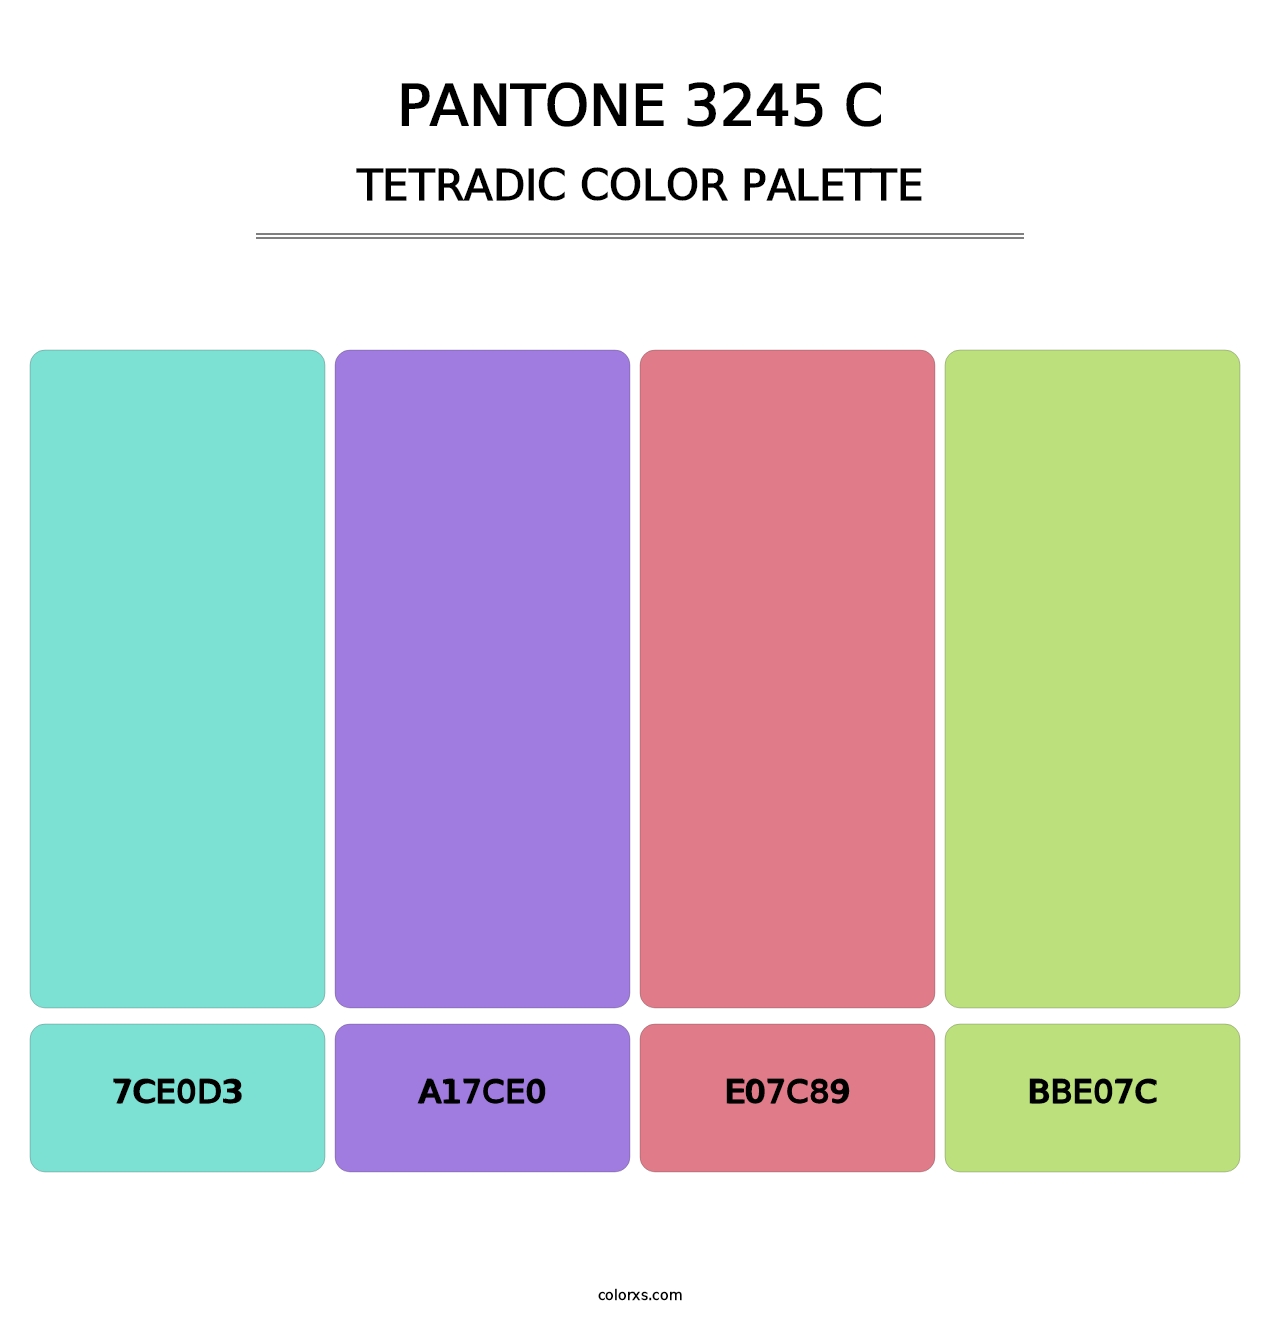 PANTONE 3245 C - Tetradic Color Palette